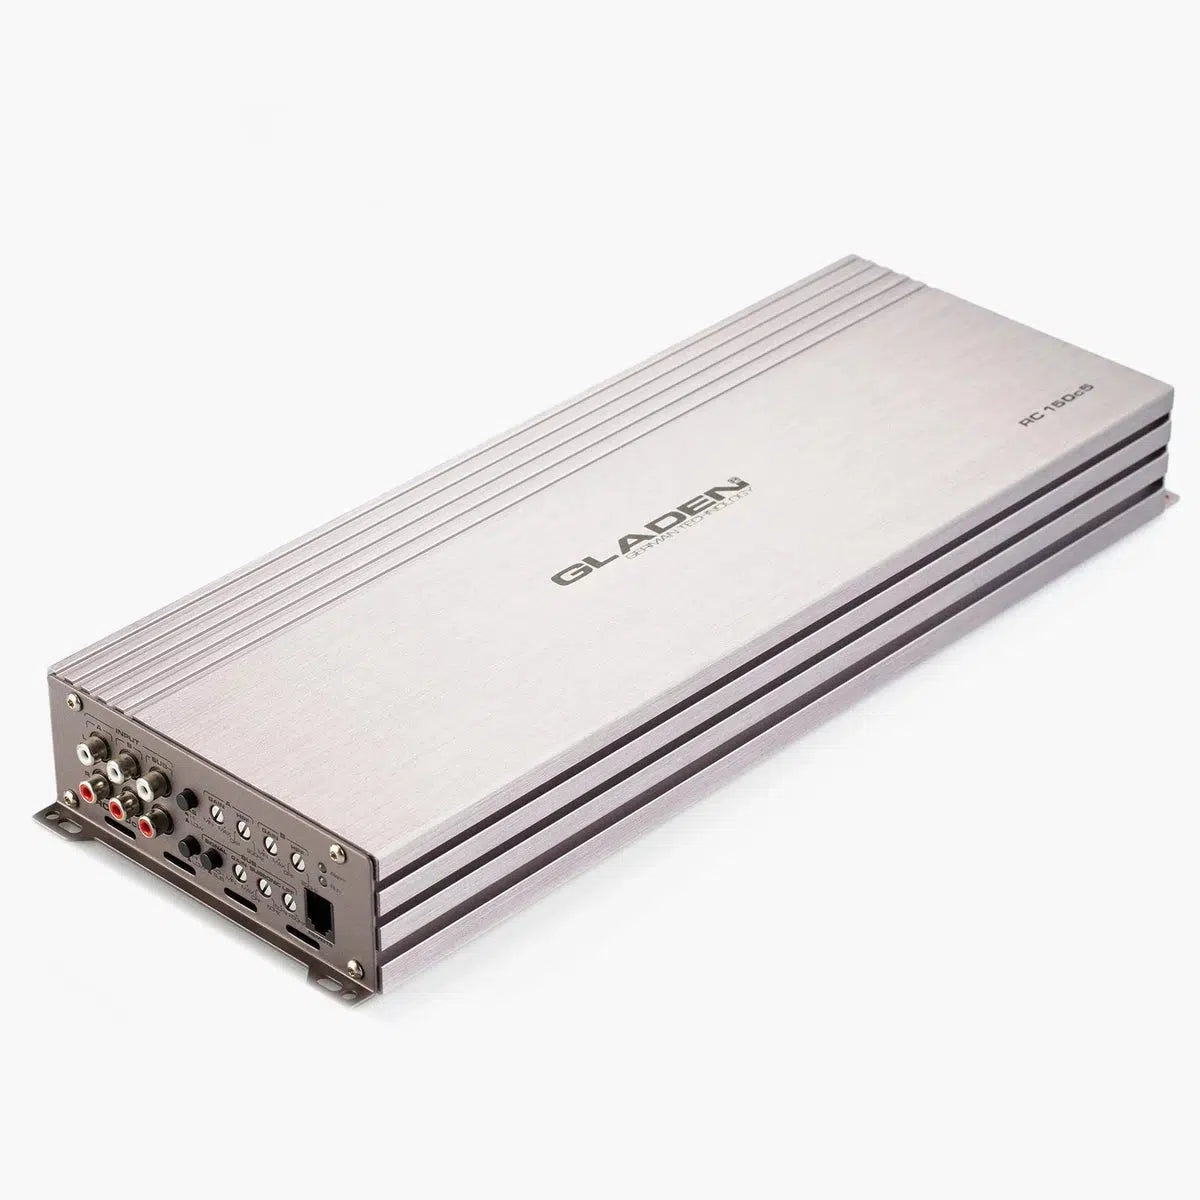 Gladen-RC 150C5-5-Channel Amplifier-Masori.de